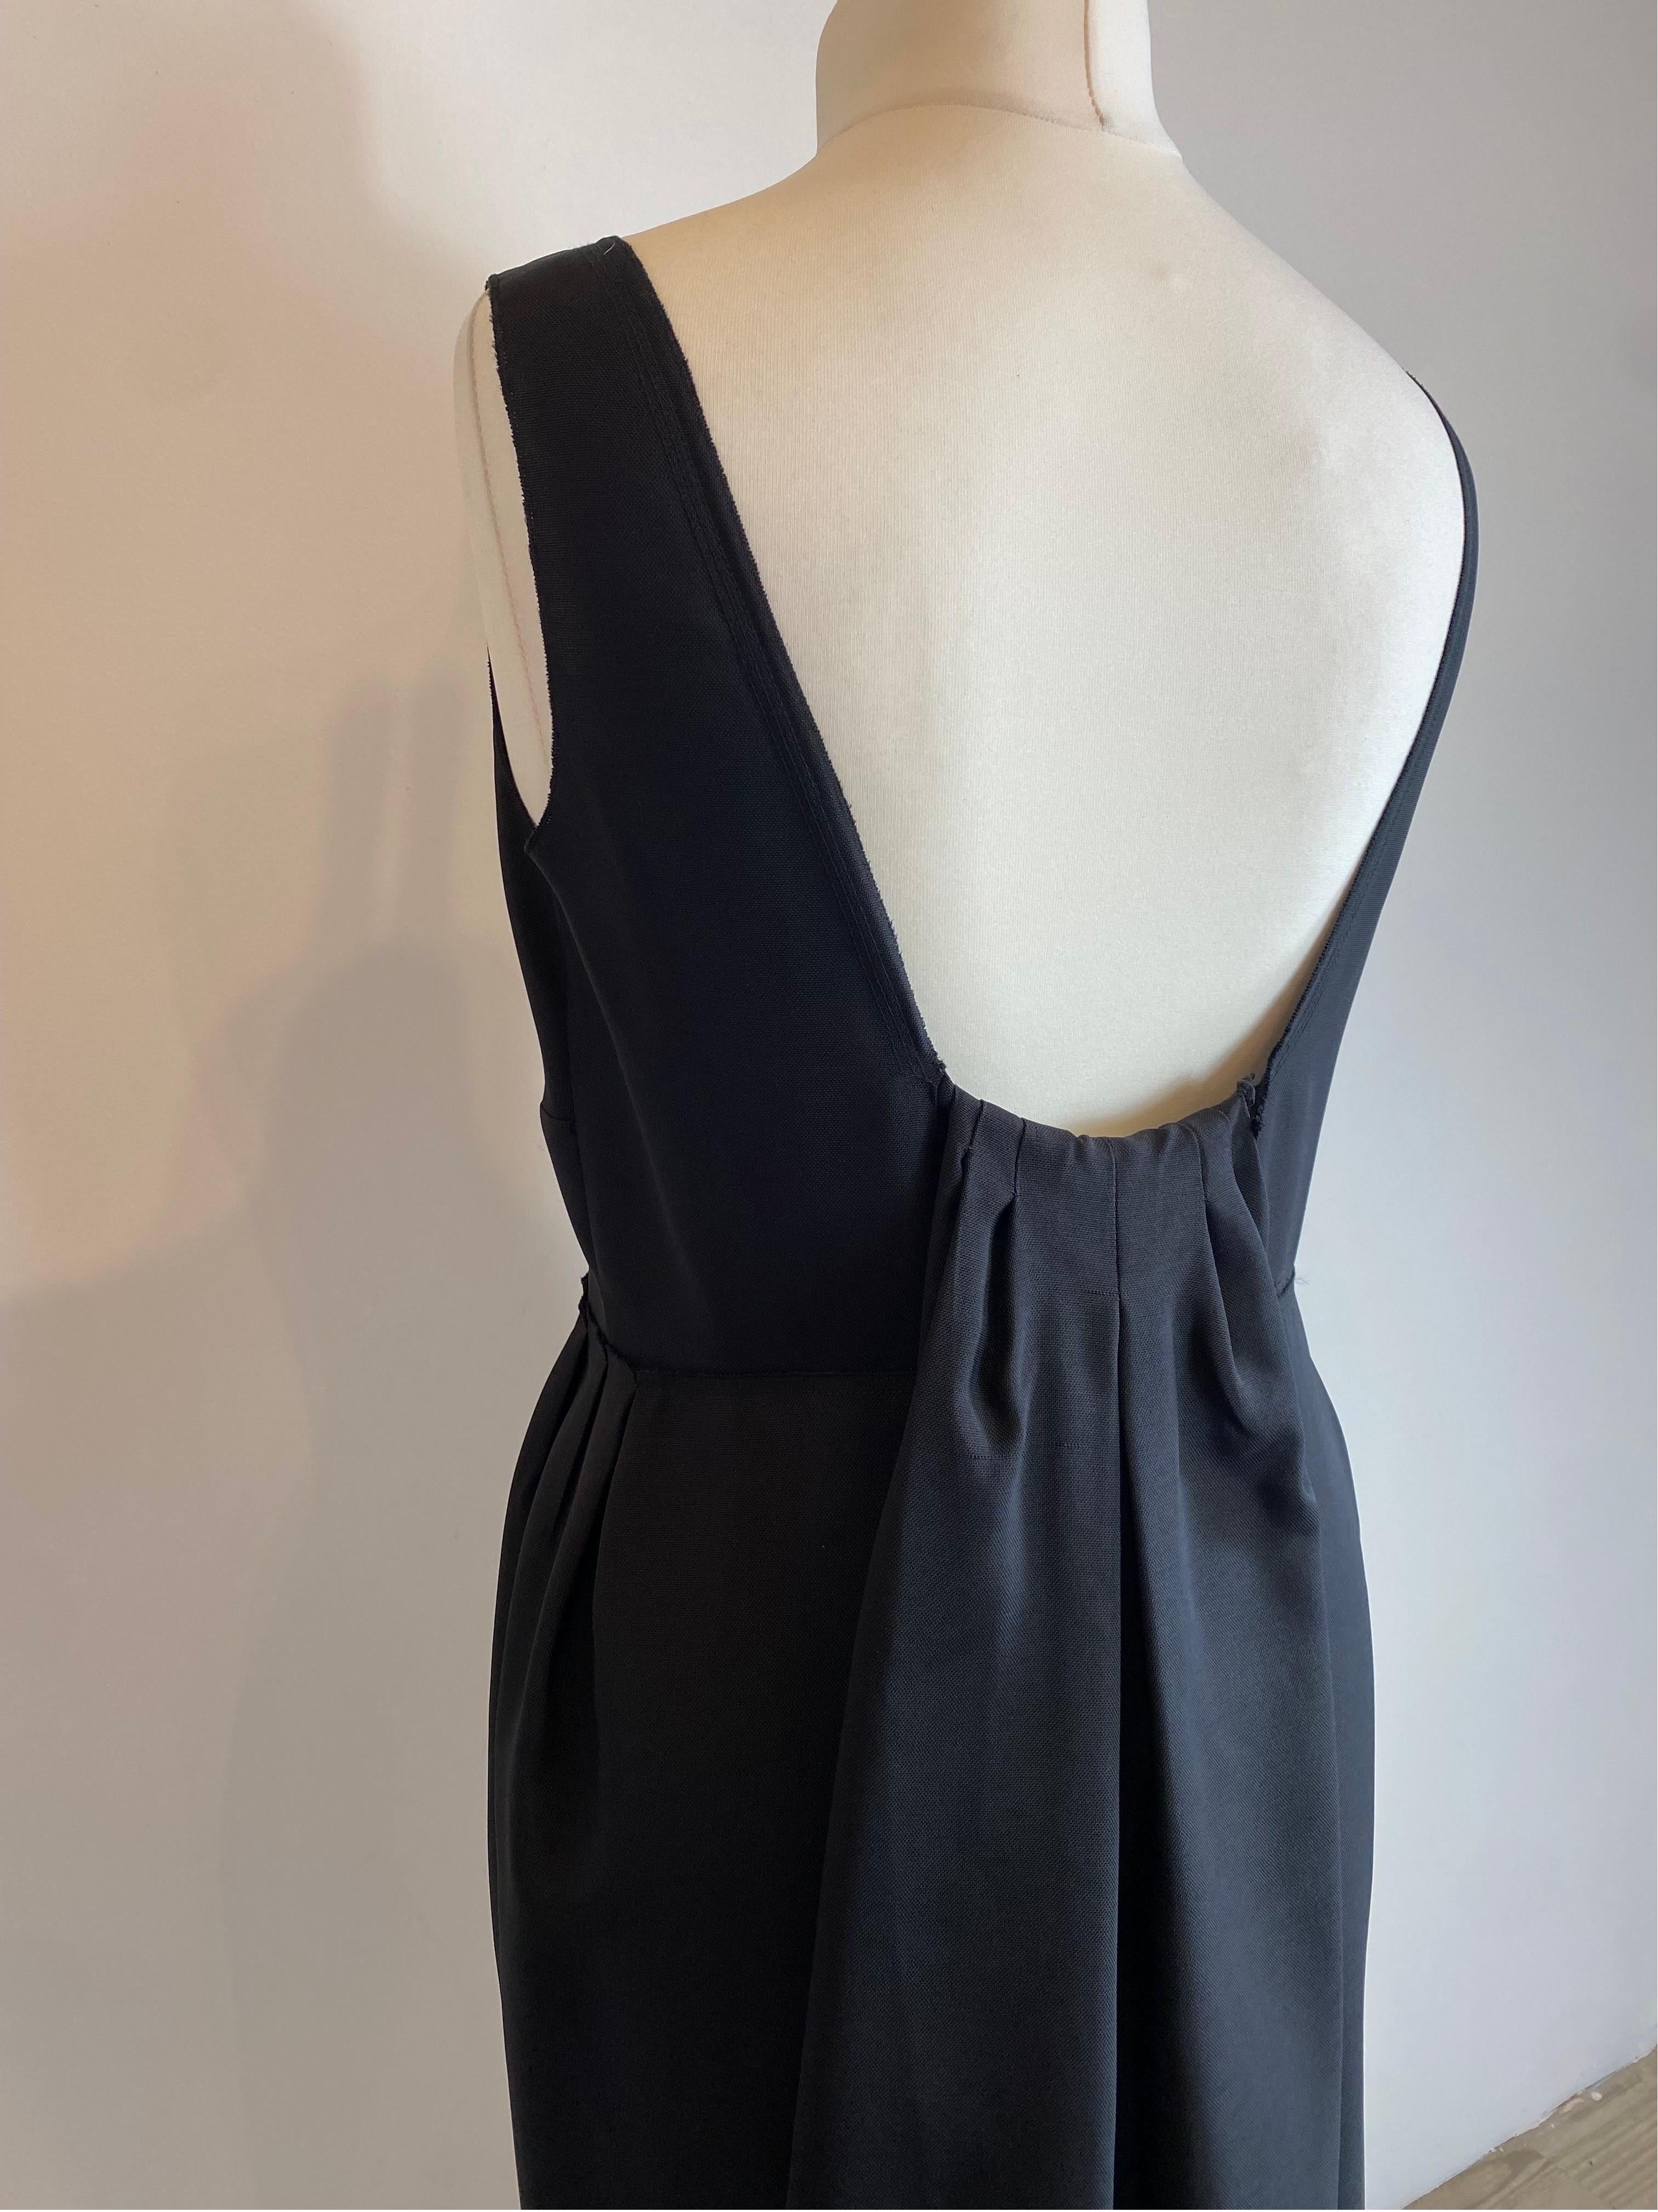 Prada elegant black Sheath Dress For Sale 3